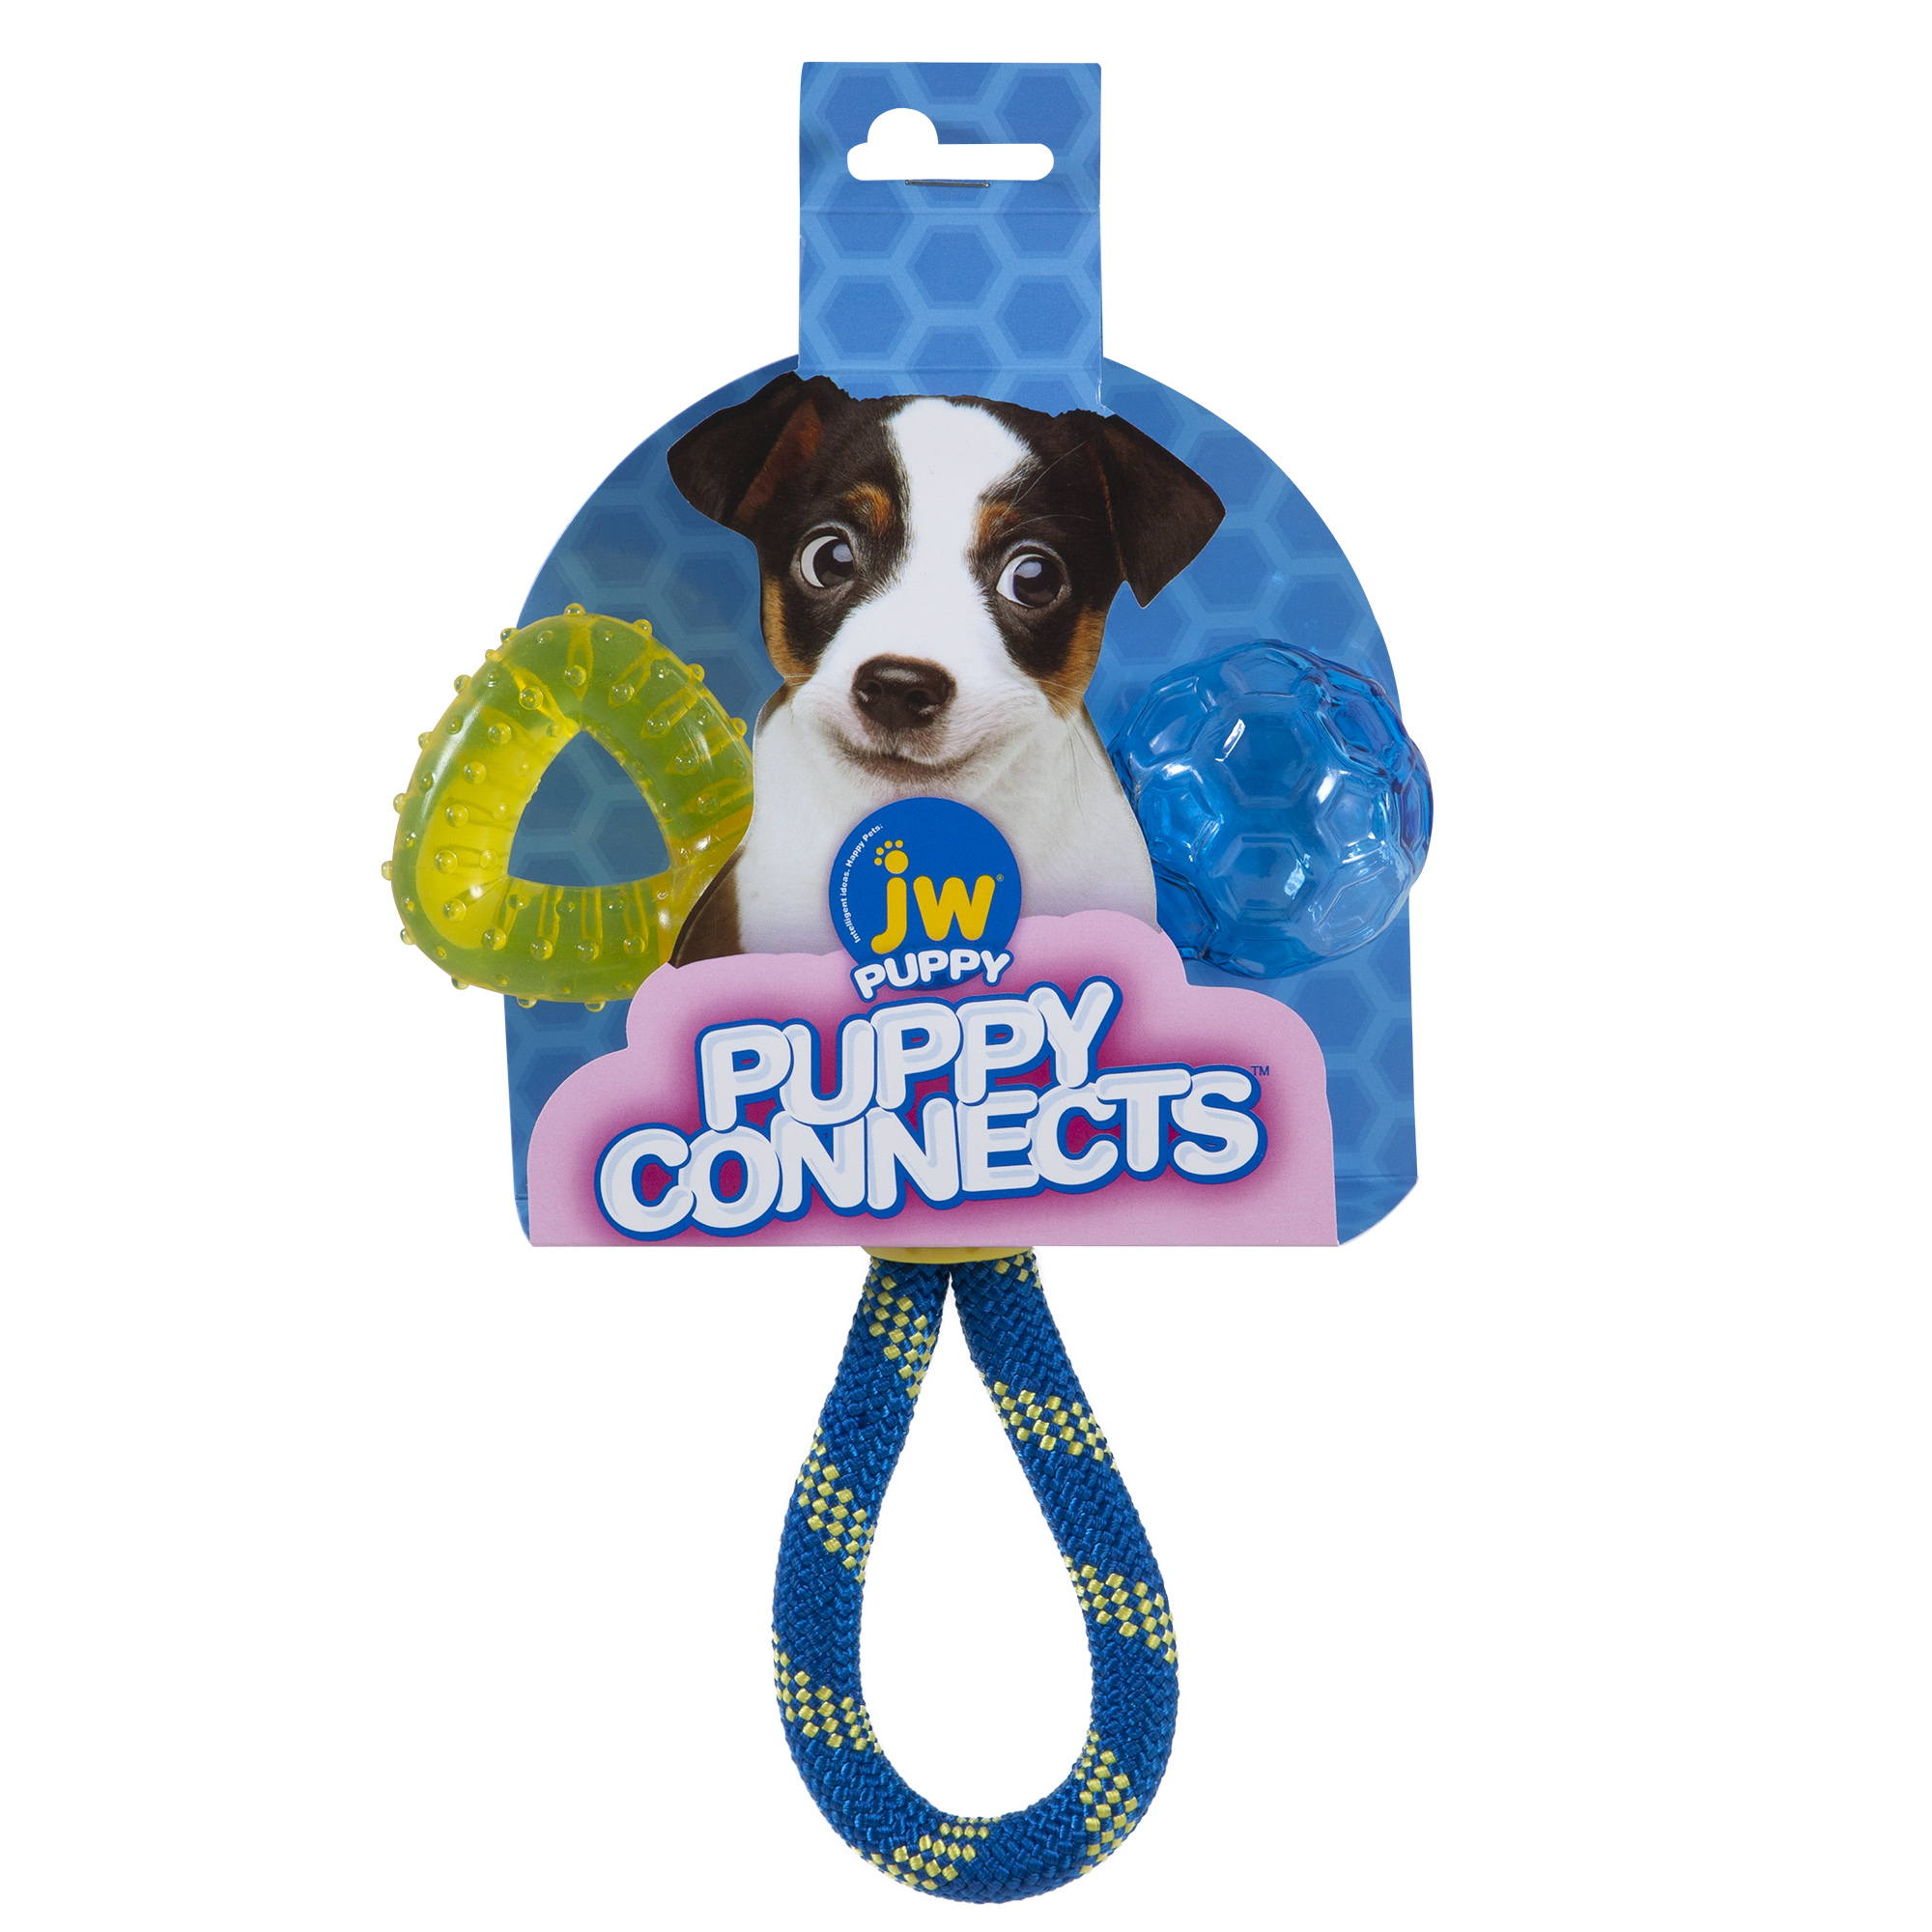 Speelgoed 3 in 1 JW Puppy Connects voor puppy